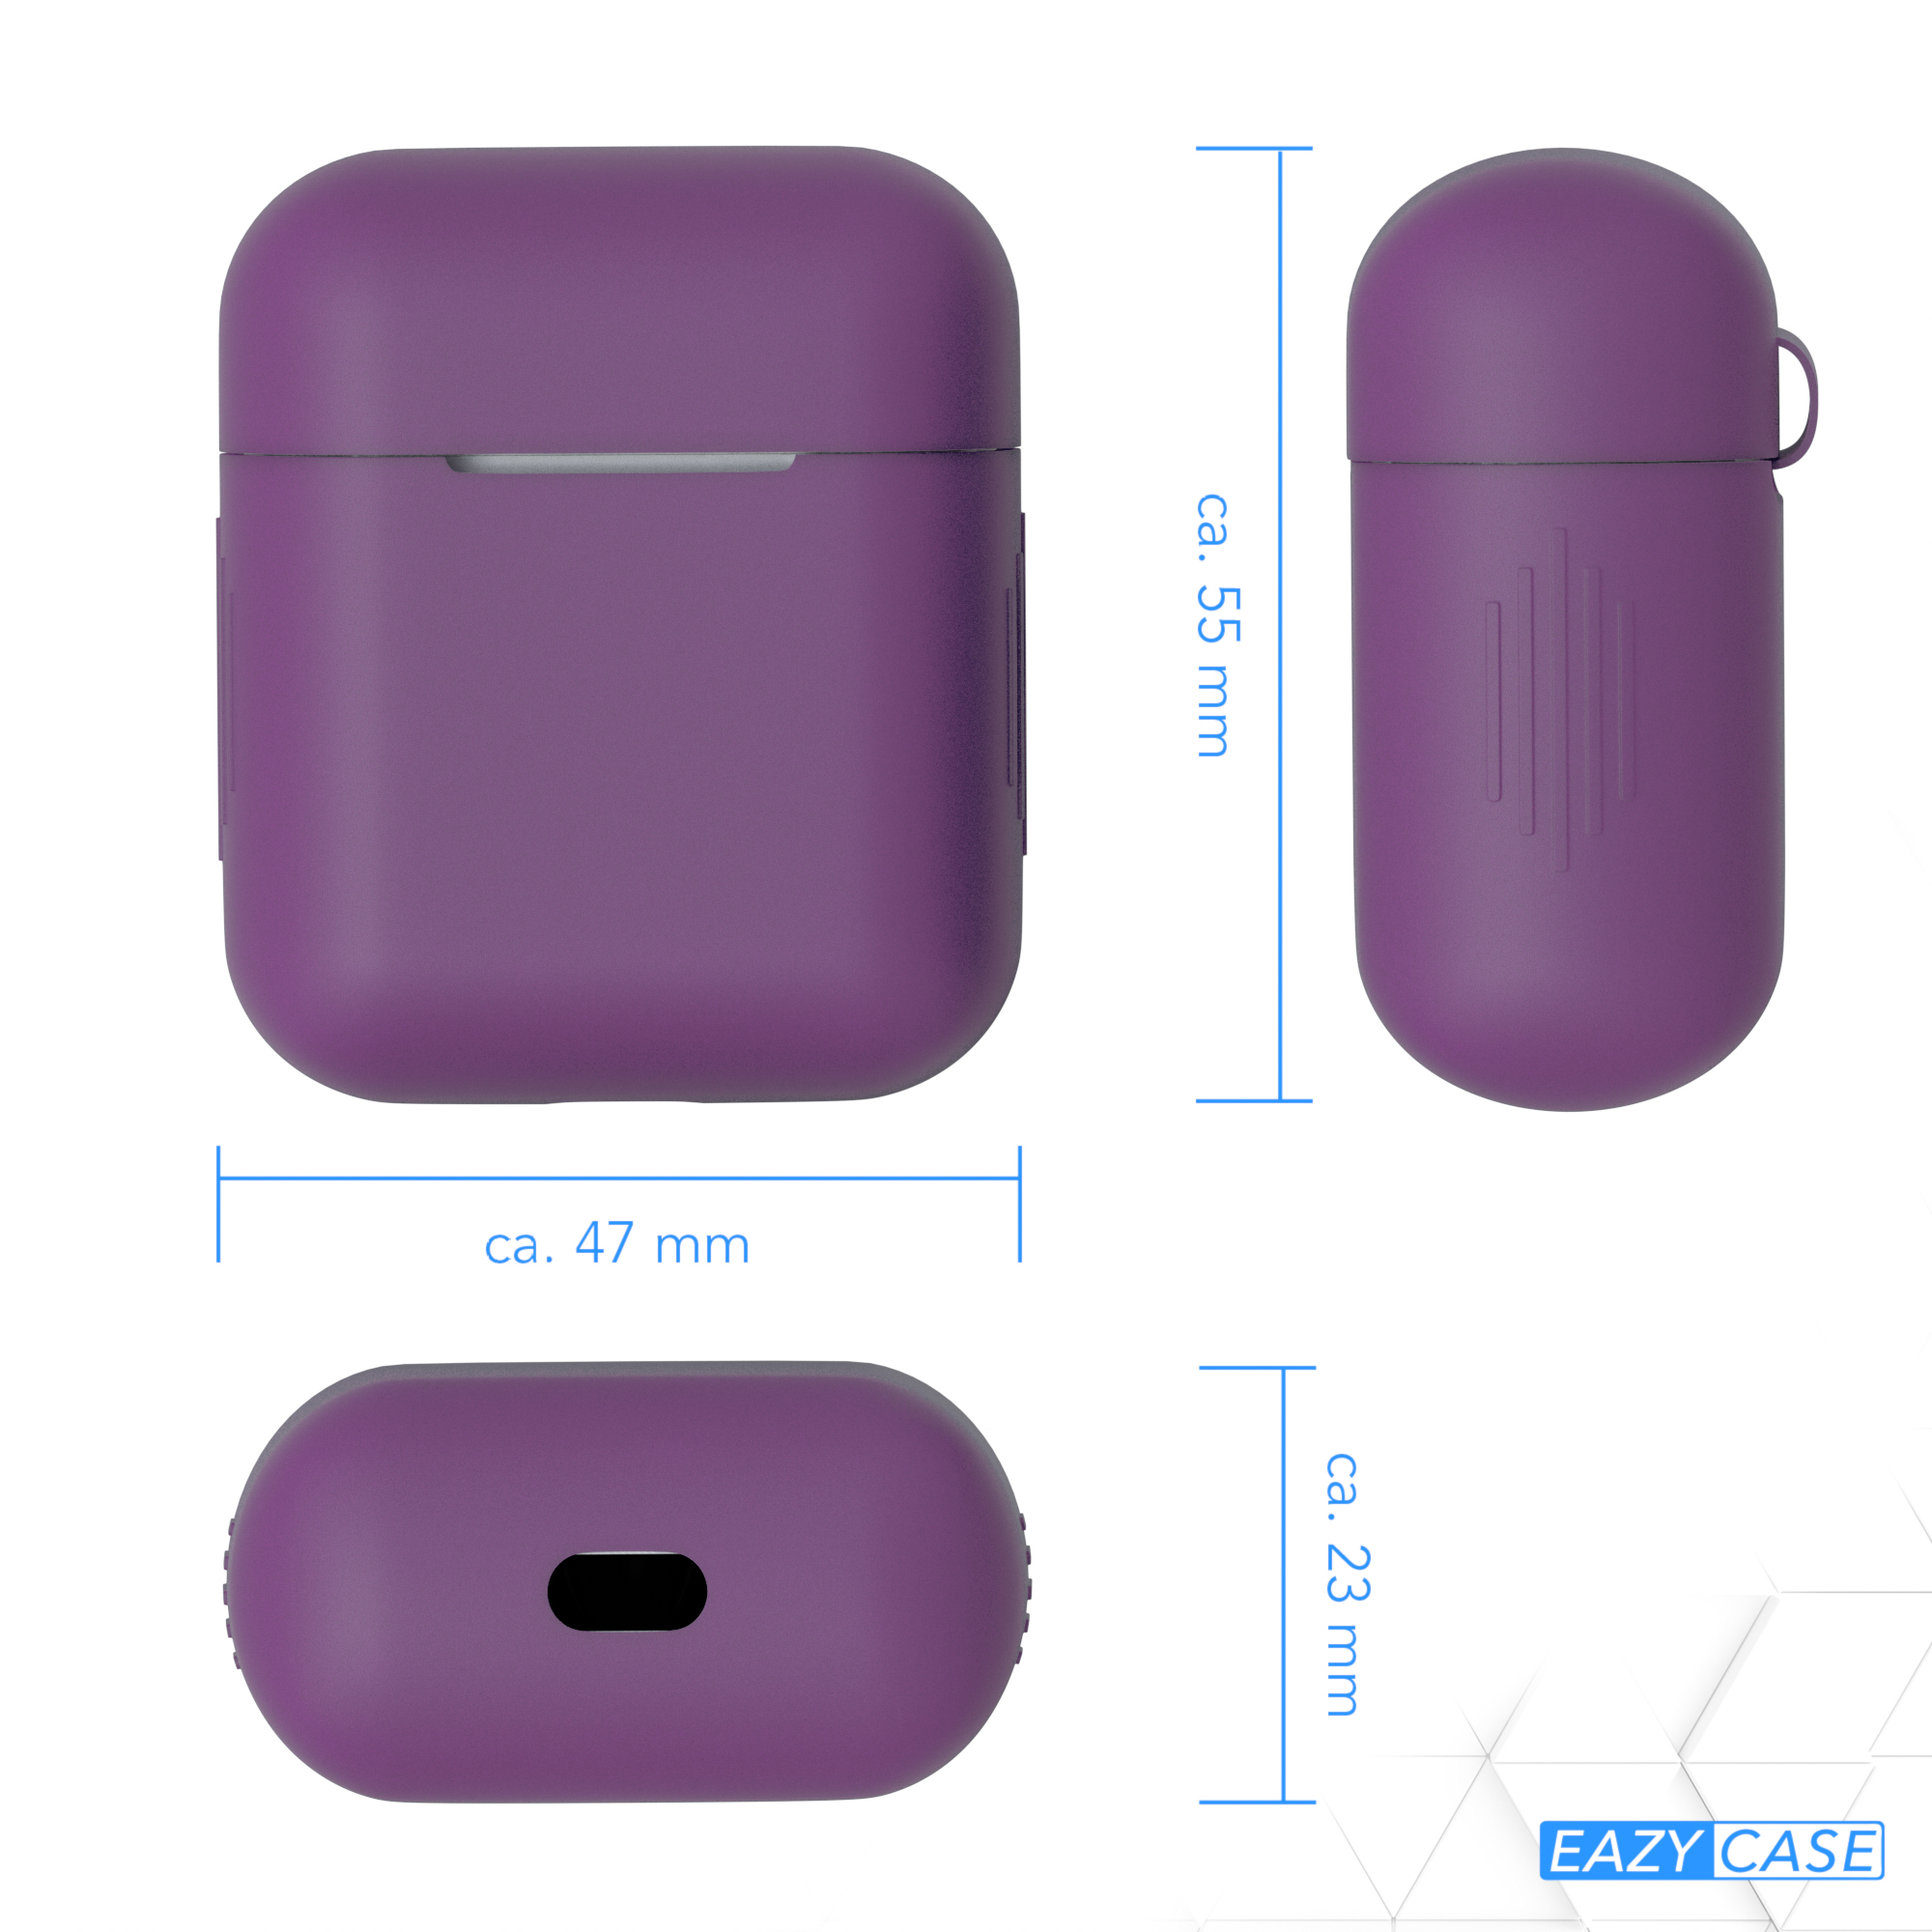 für: CASE EAZY Apple Case passend AirPods Schutzhülle Silikon Sleeve Lila